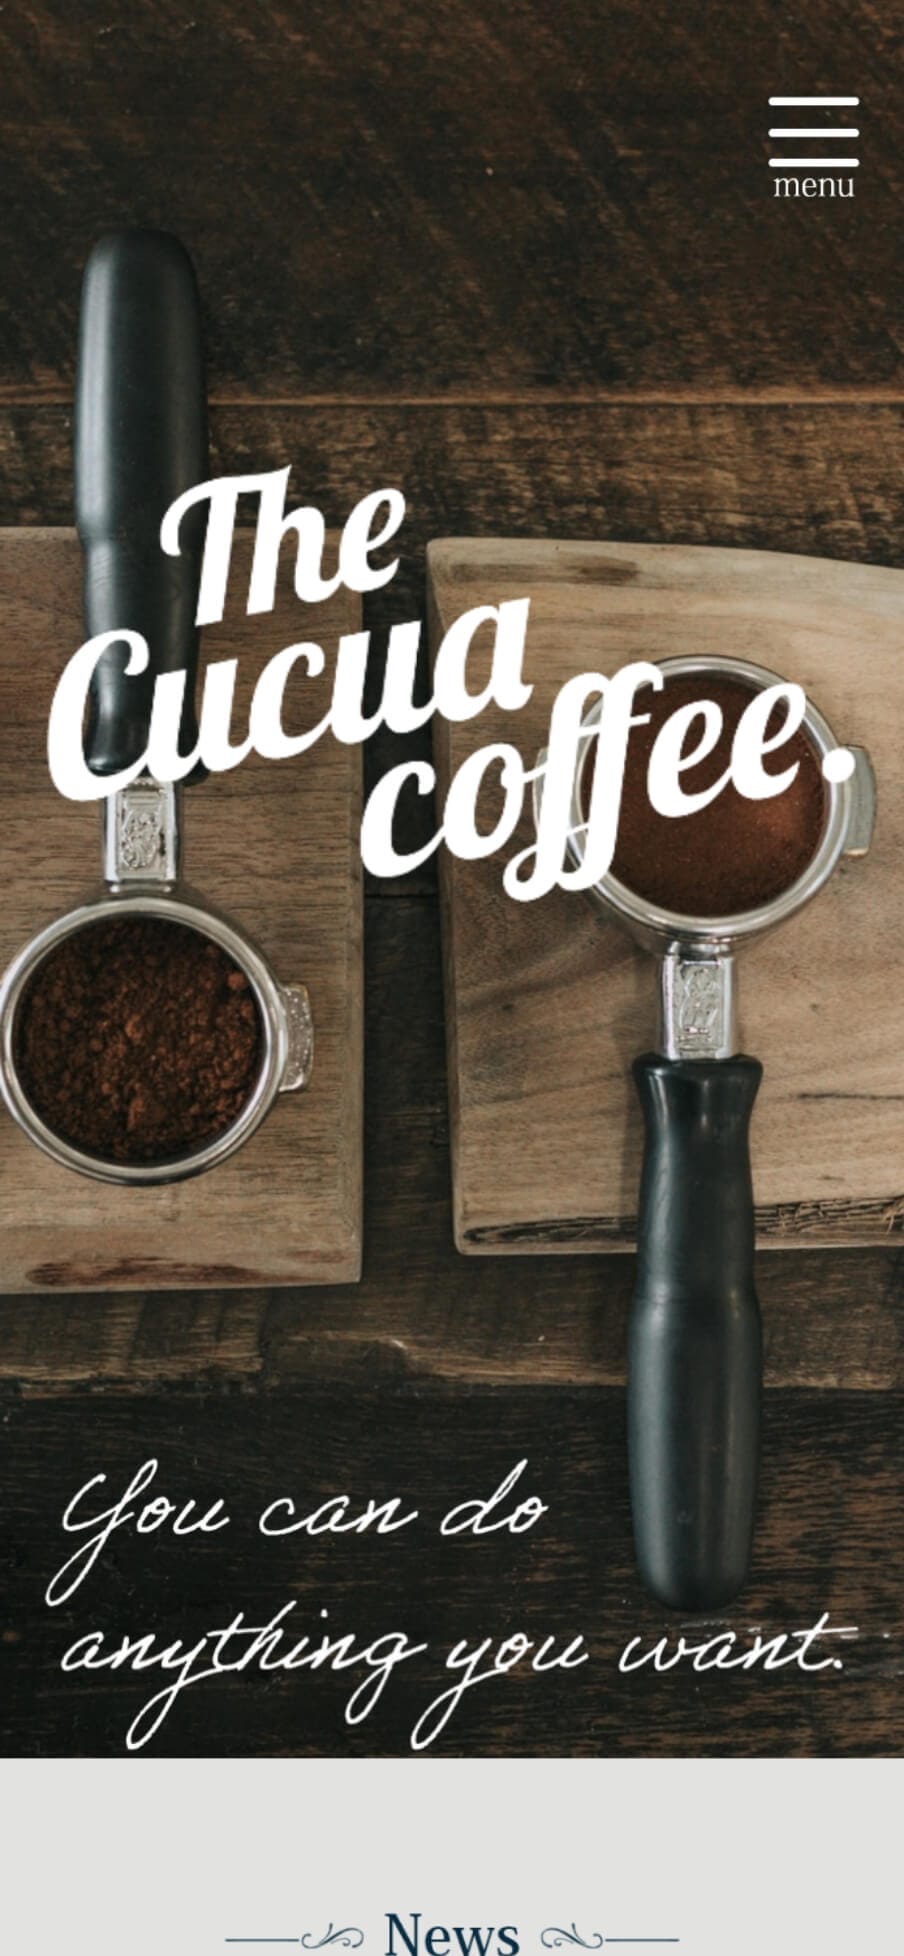 The Cucua Coffee.のスマホデザイン